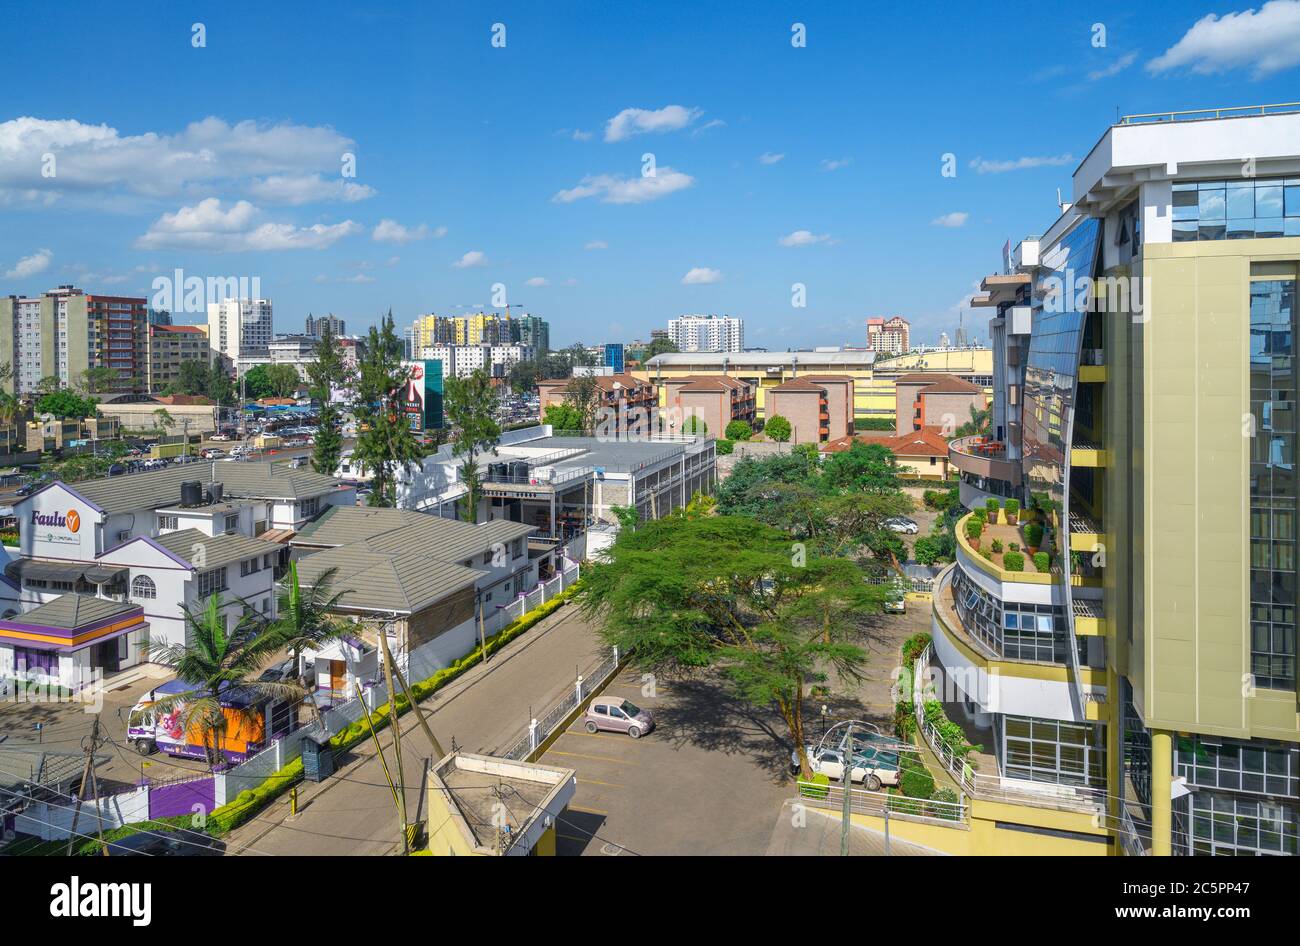 Vista del quartiere di Hurlingham dal Doubletree by Hilton Hotel, Hurlingham, Nairobi, Kenya, Africa Orientale Foto Stock